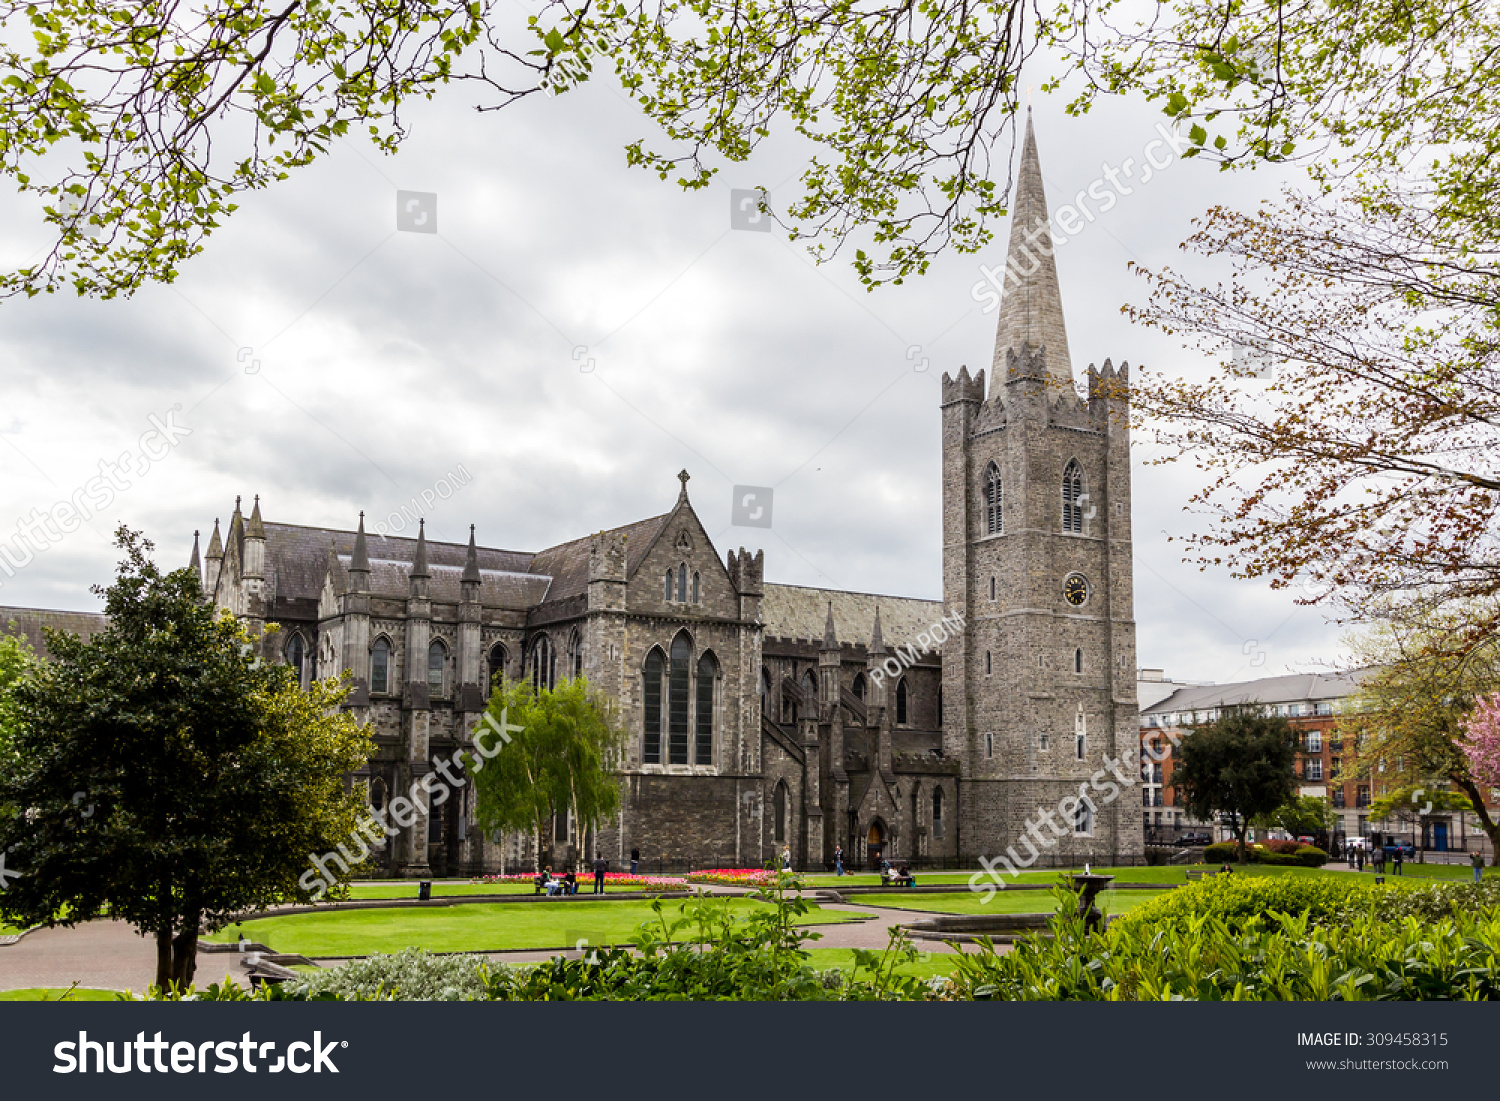 stock photo st patrick s cathedral dublin ireland 309458315